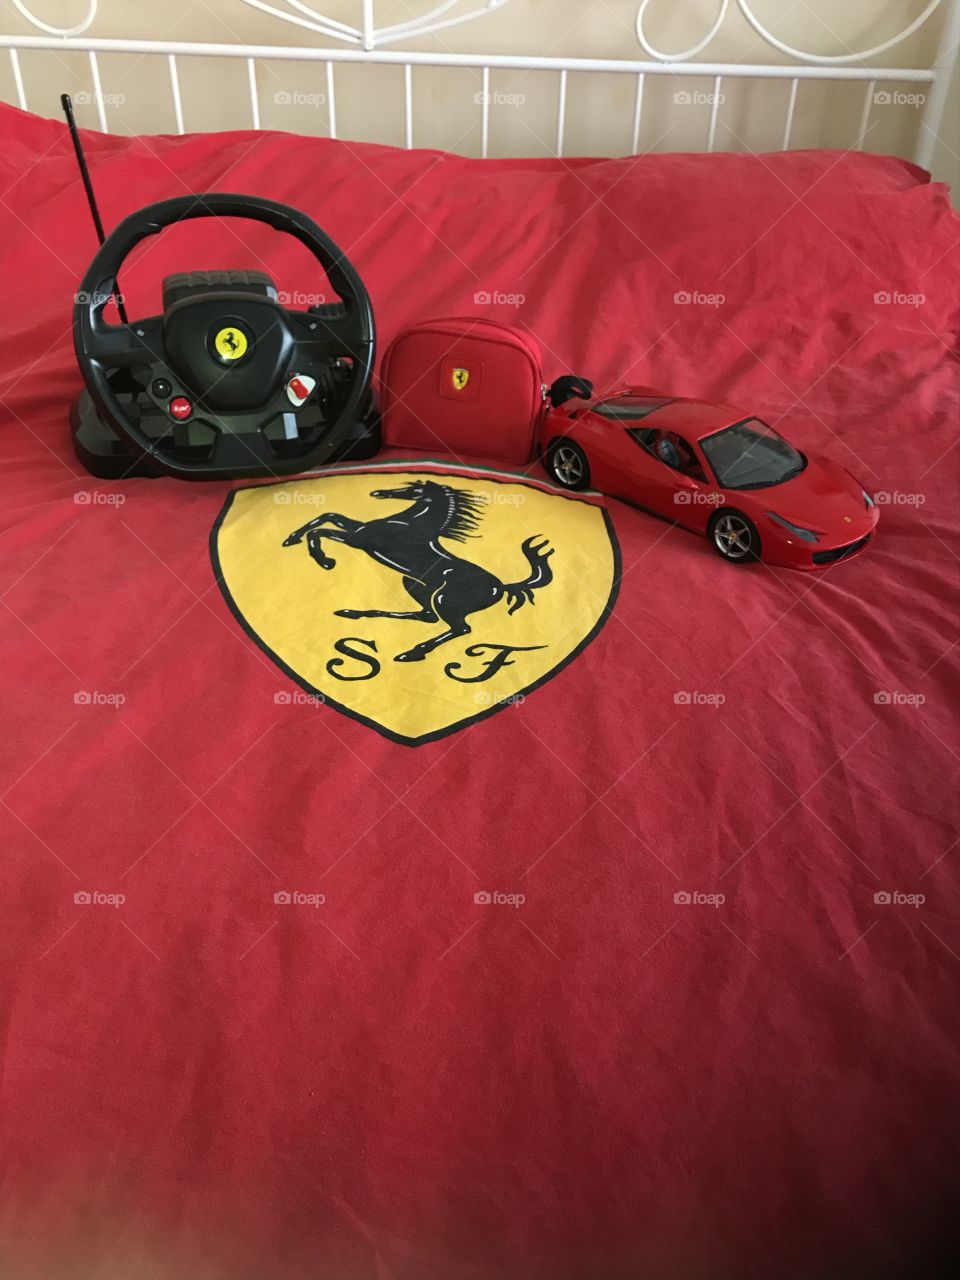 Ferrari toy and stuff 